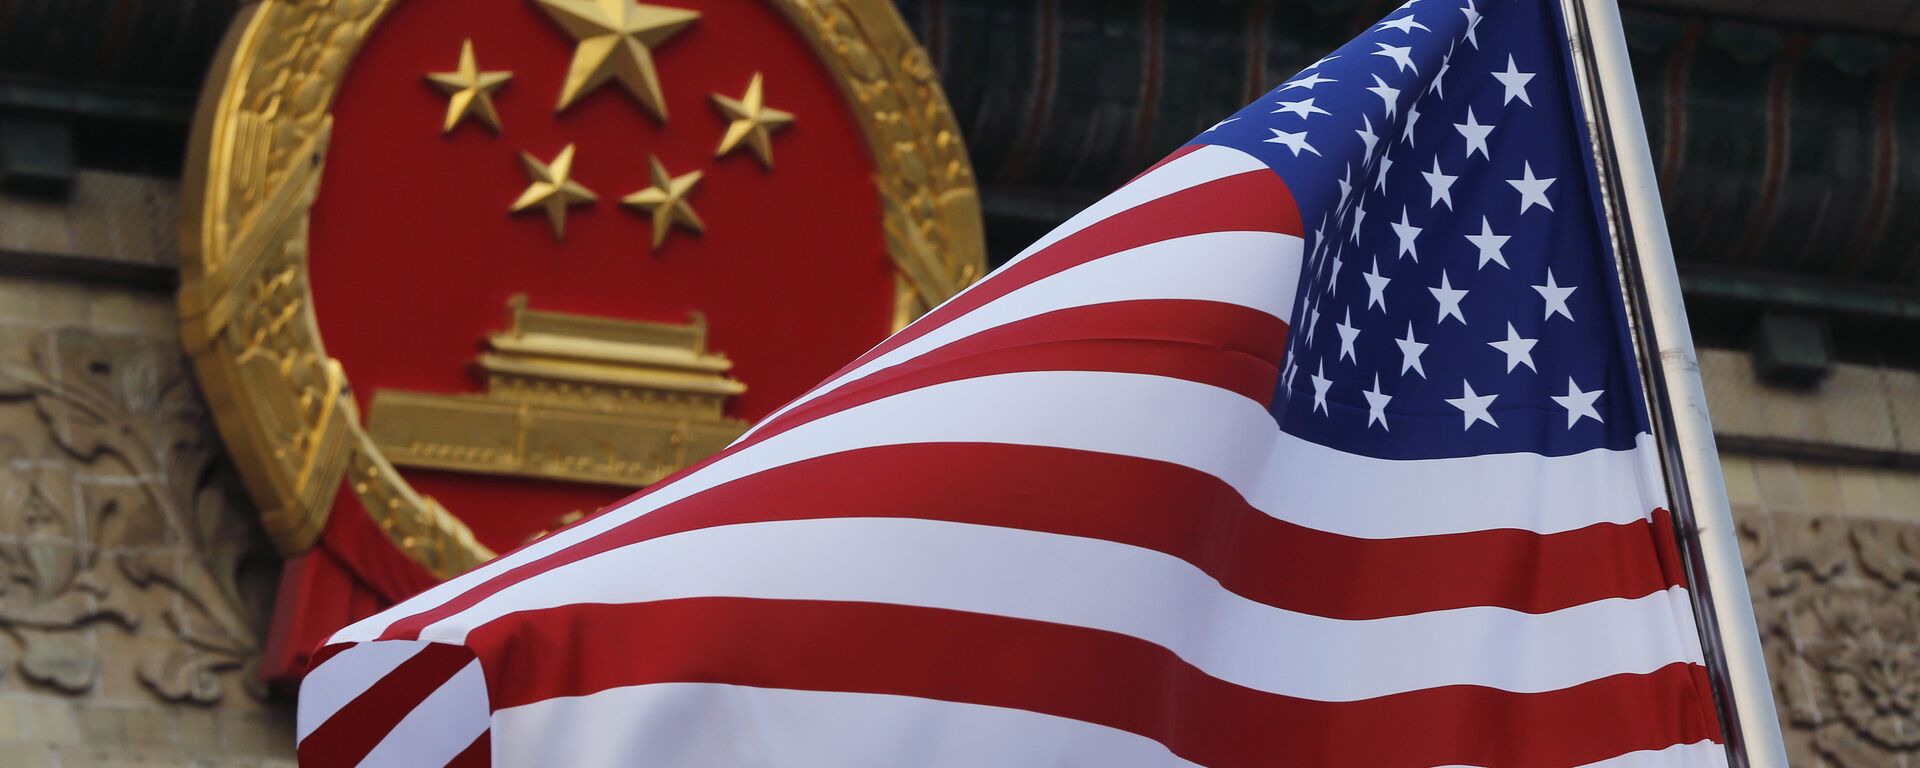 La bandera de EEUU y el emblema de China  - Sputnik Mundo, 1920, 09.06.2021